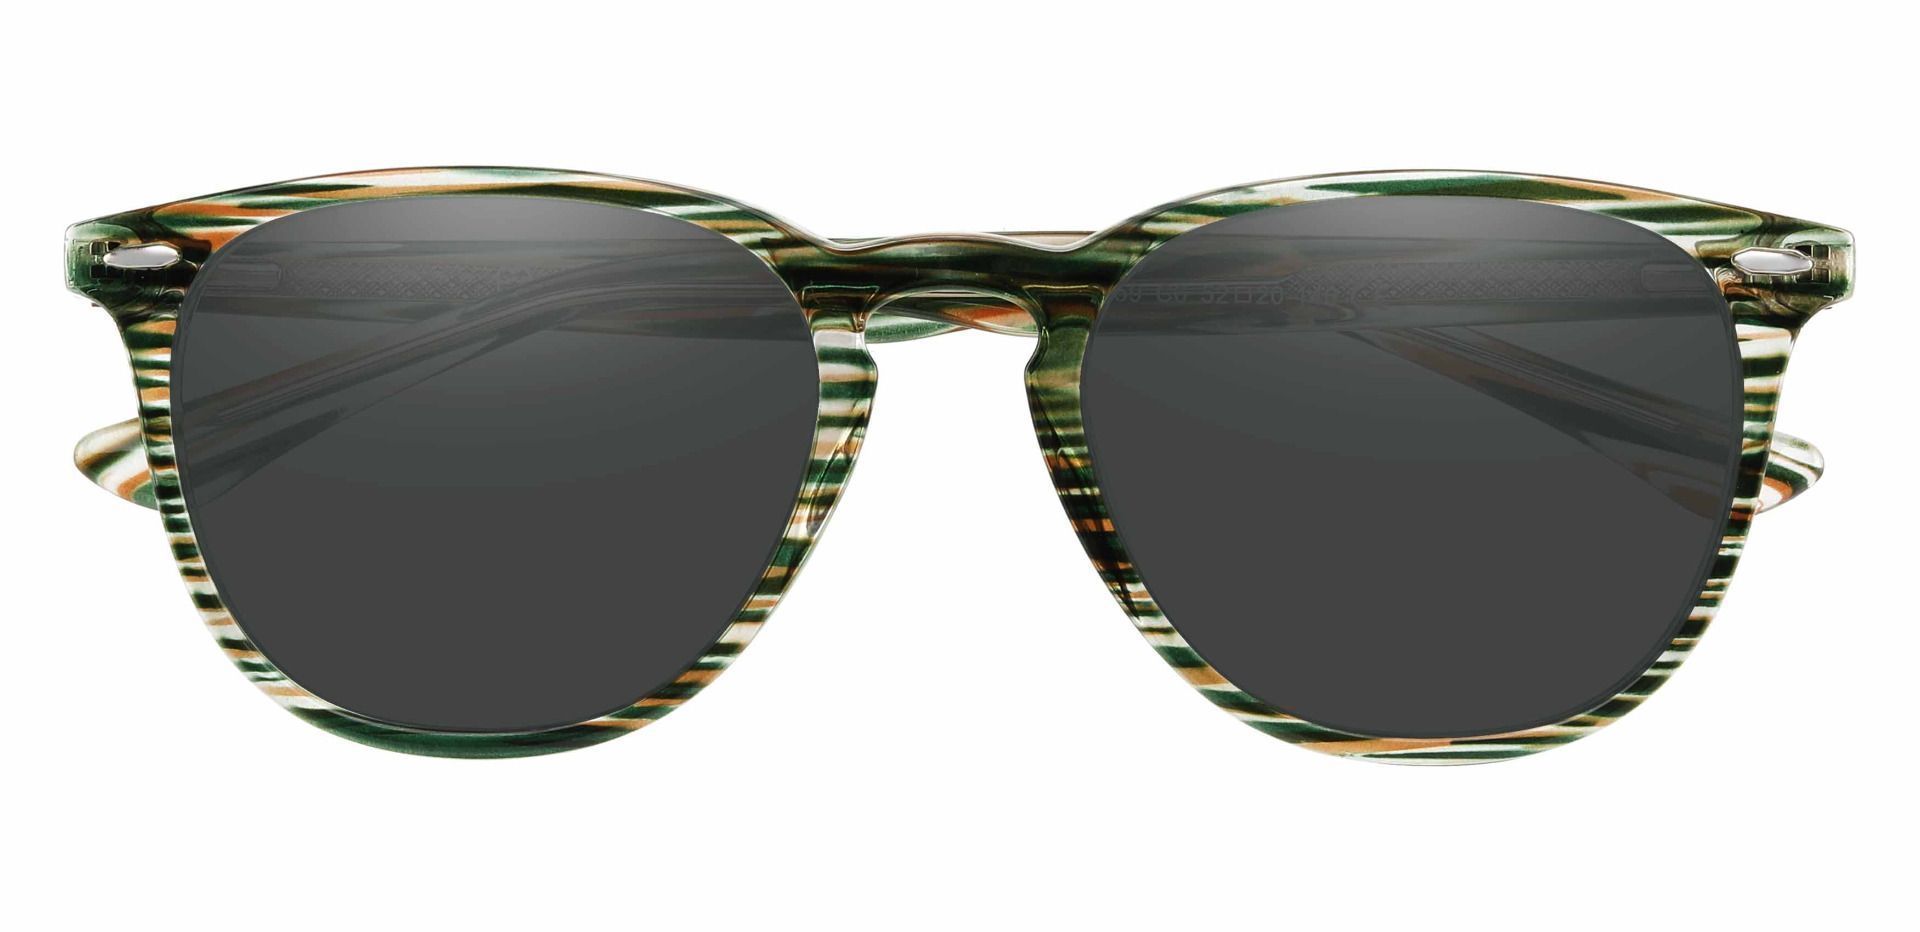 Sycamore Oval Prescription Sunglasses - Green Frame With Gray Lenses